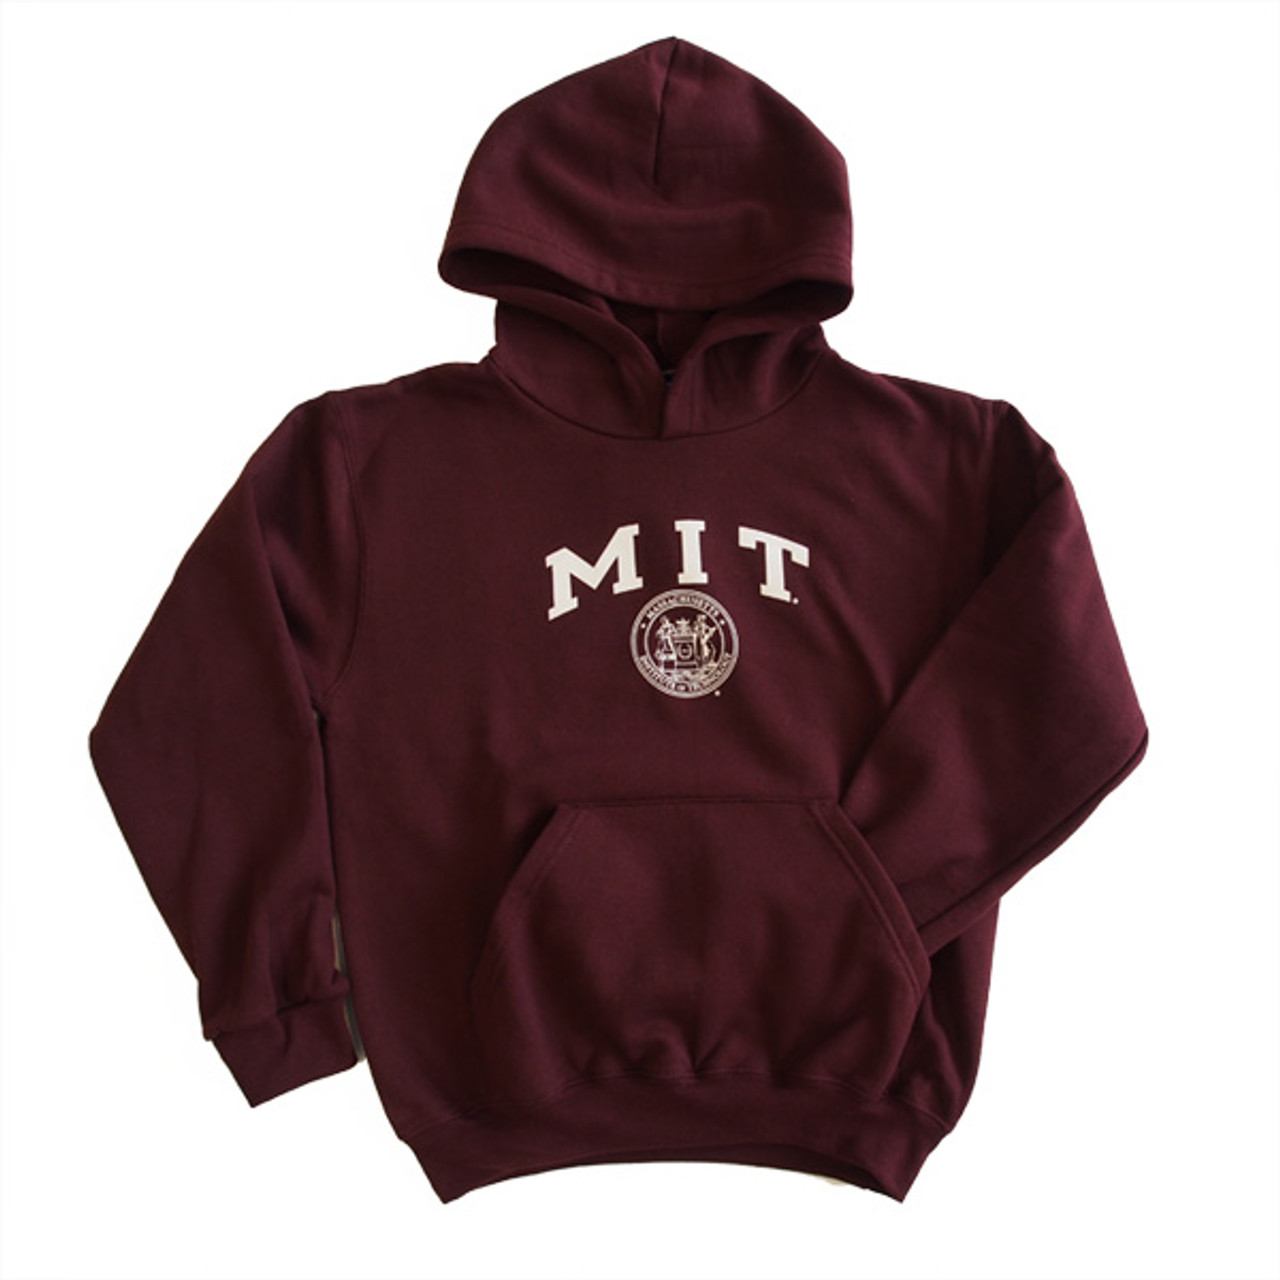 Child\'s hoodie with MIT logo